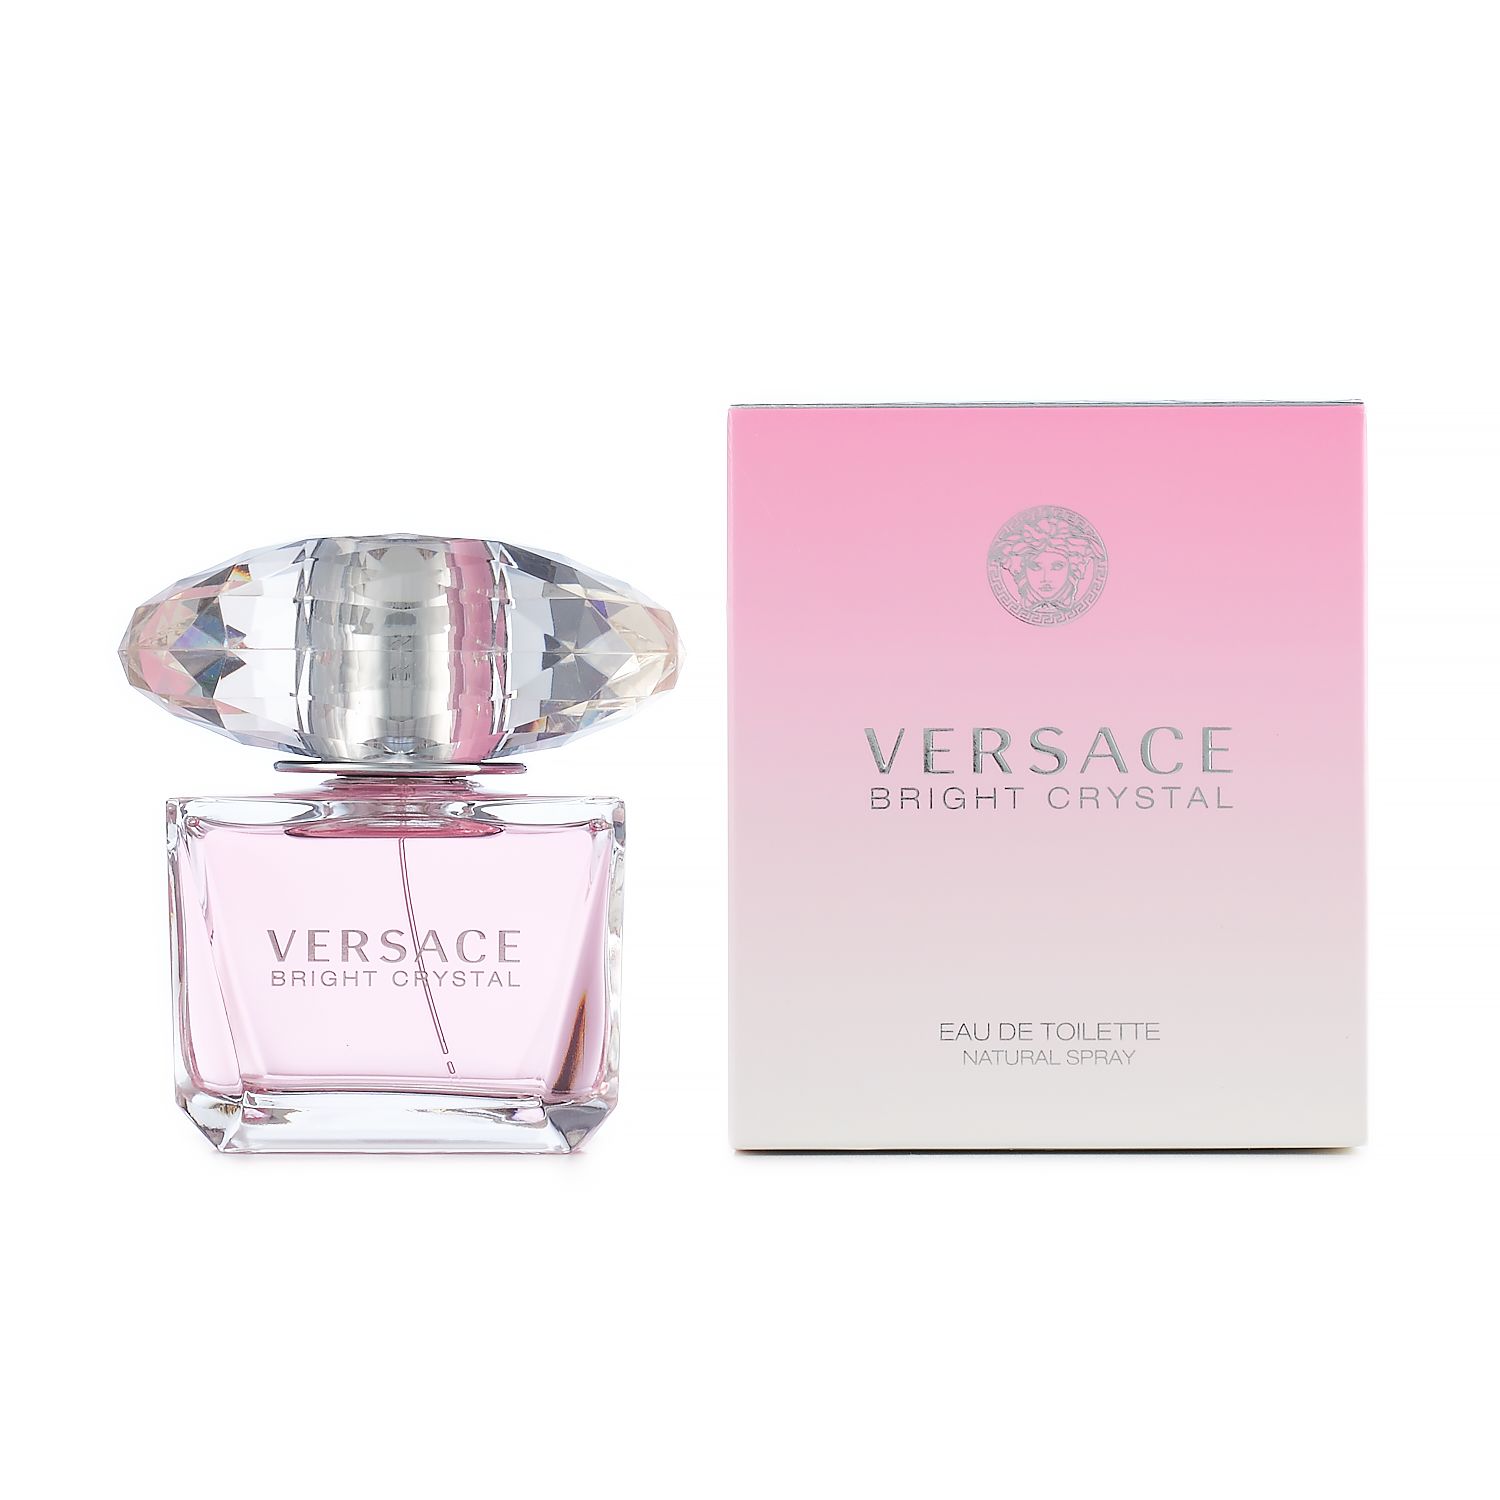 versace flower perfume